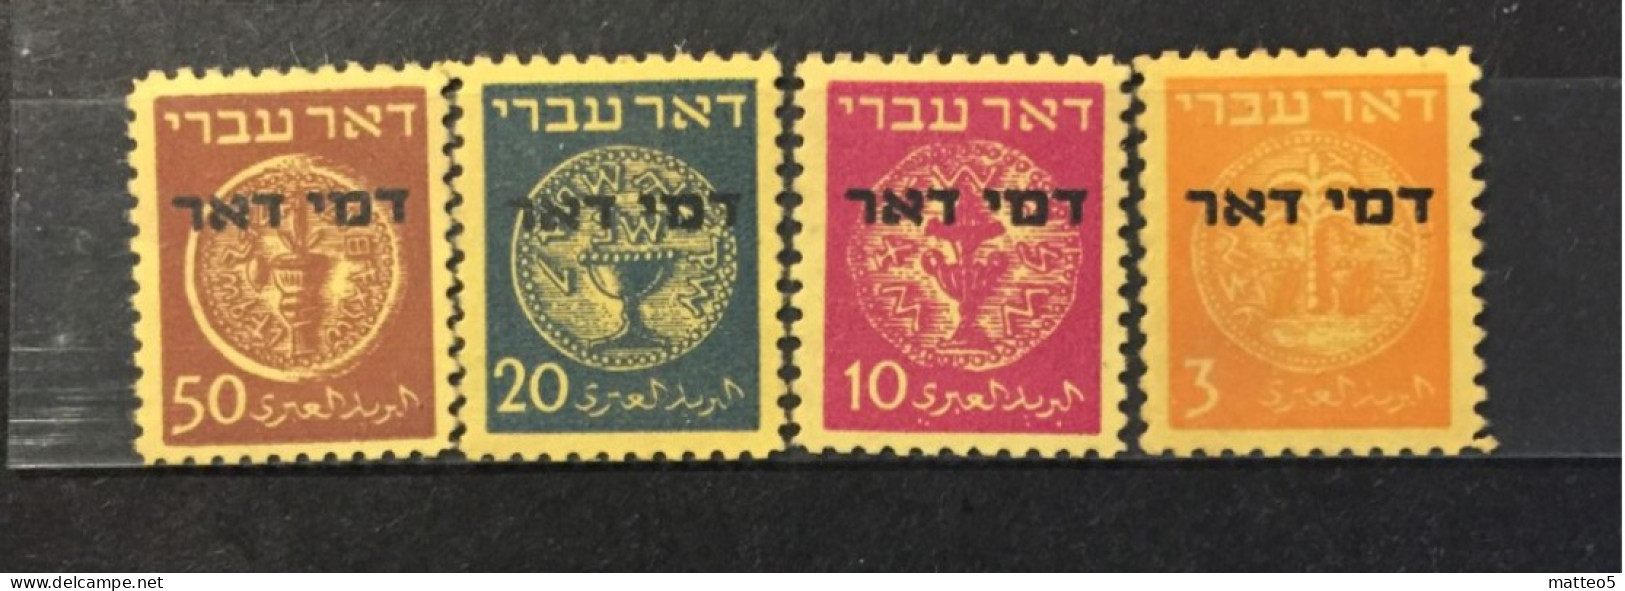 1948 - Israel - Coins Doar Ivri - Postage Due . No Tab - 4 Stamps Unused - Nuovi (senza Tab)